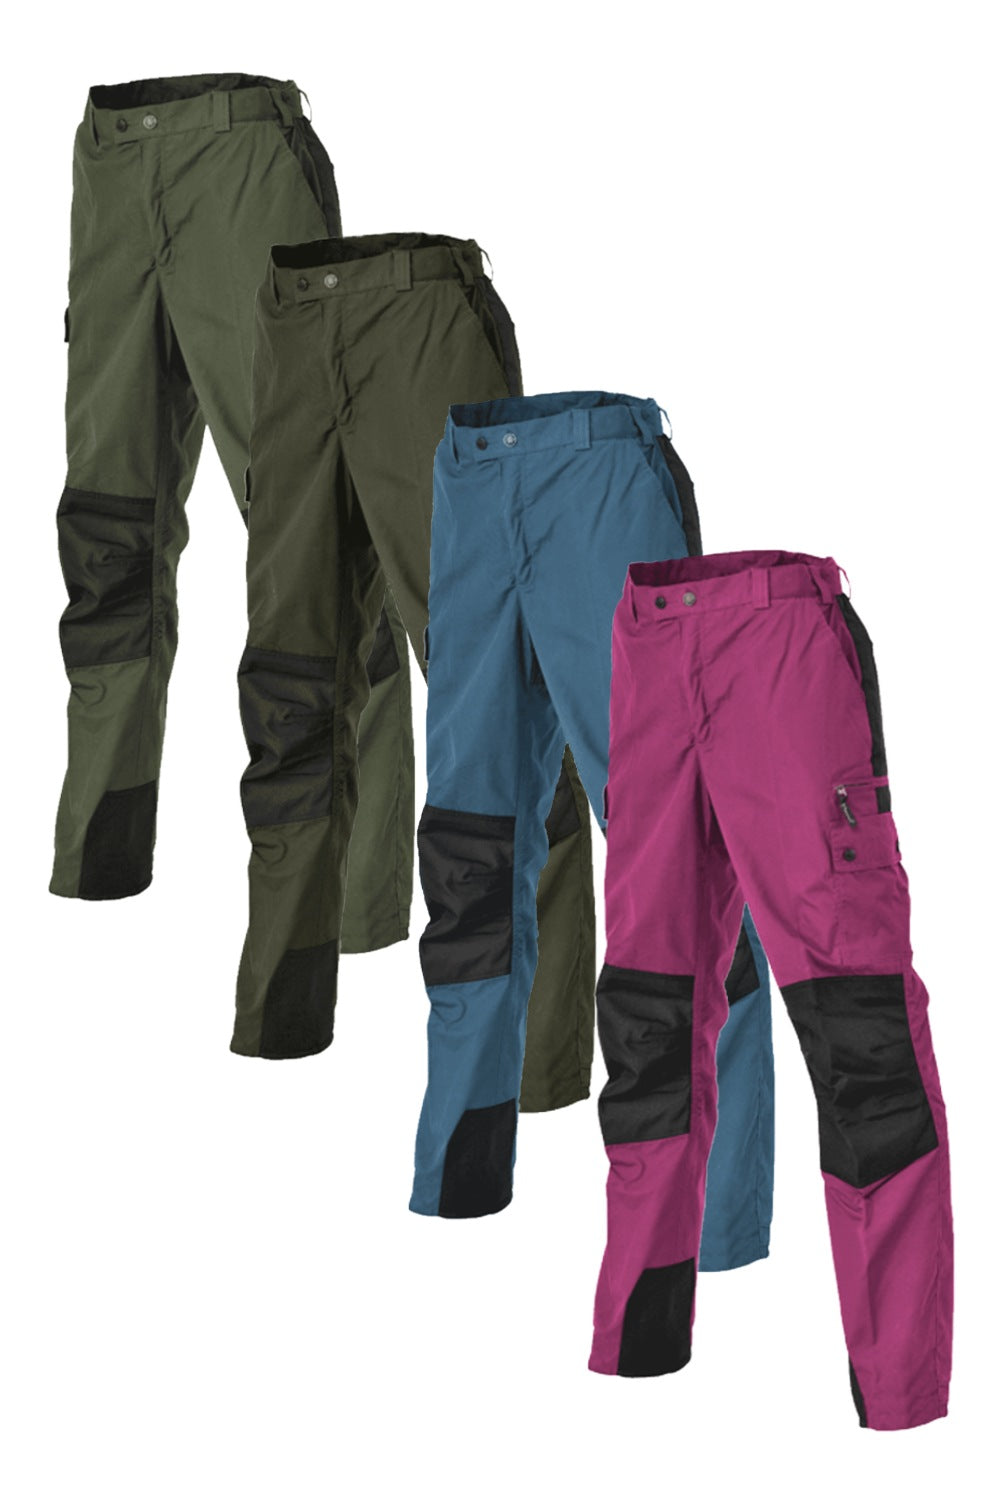 Pinewood Childrens Lappland Trousers in Mid Green/Black, Mossgree/Black, Steelblue/Black, Rusty Pink/Black